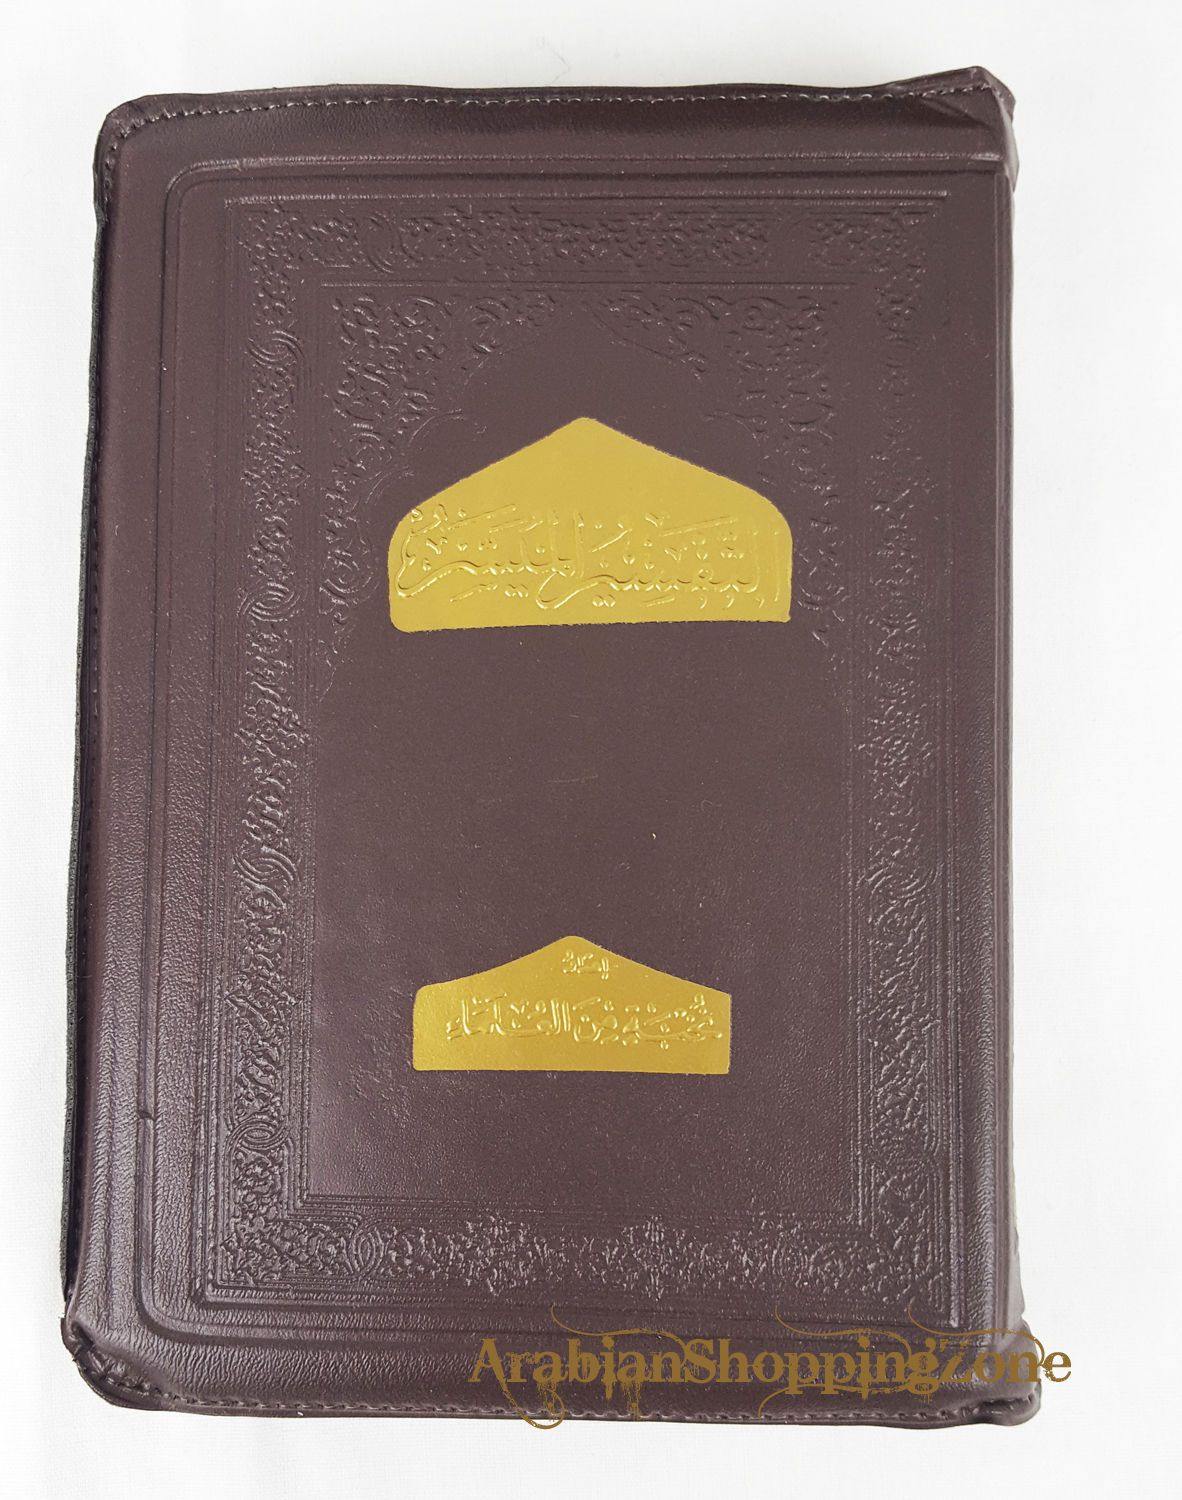 Interpretation of Quran Tafsir in Arabic Zipper Book size 17*12cm (6.7-4.7") - Arabian Shopping Zone